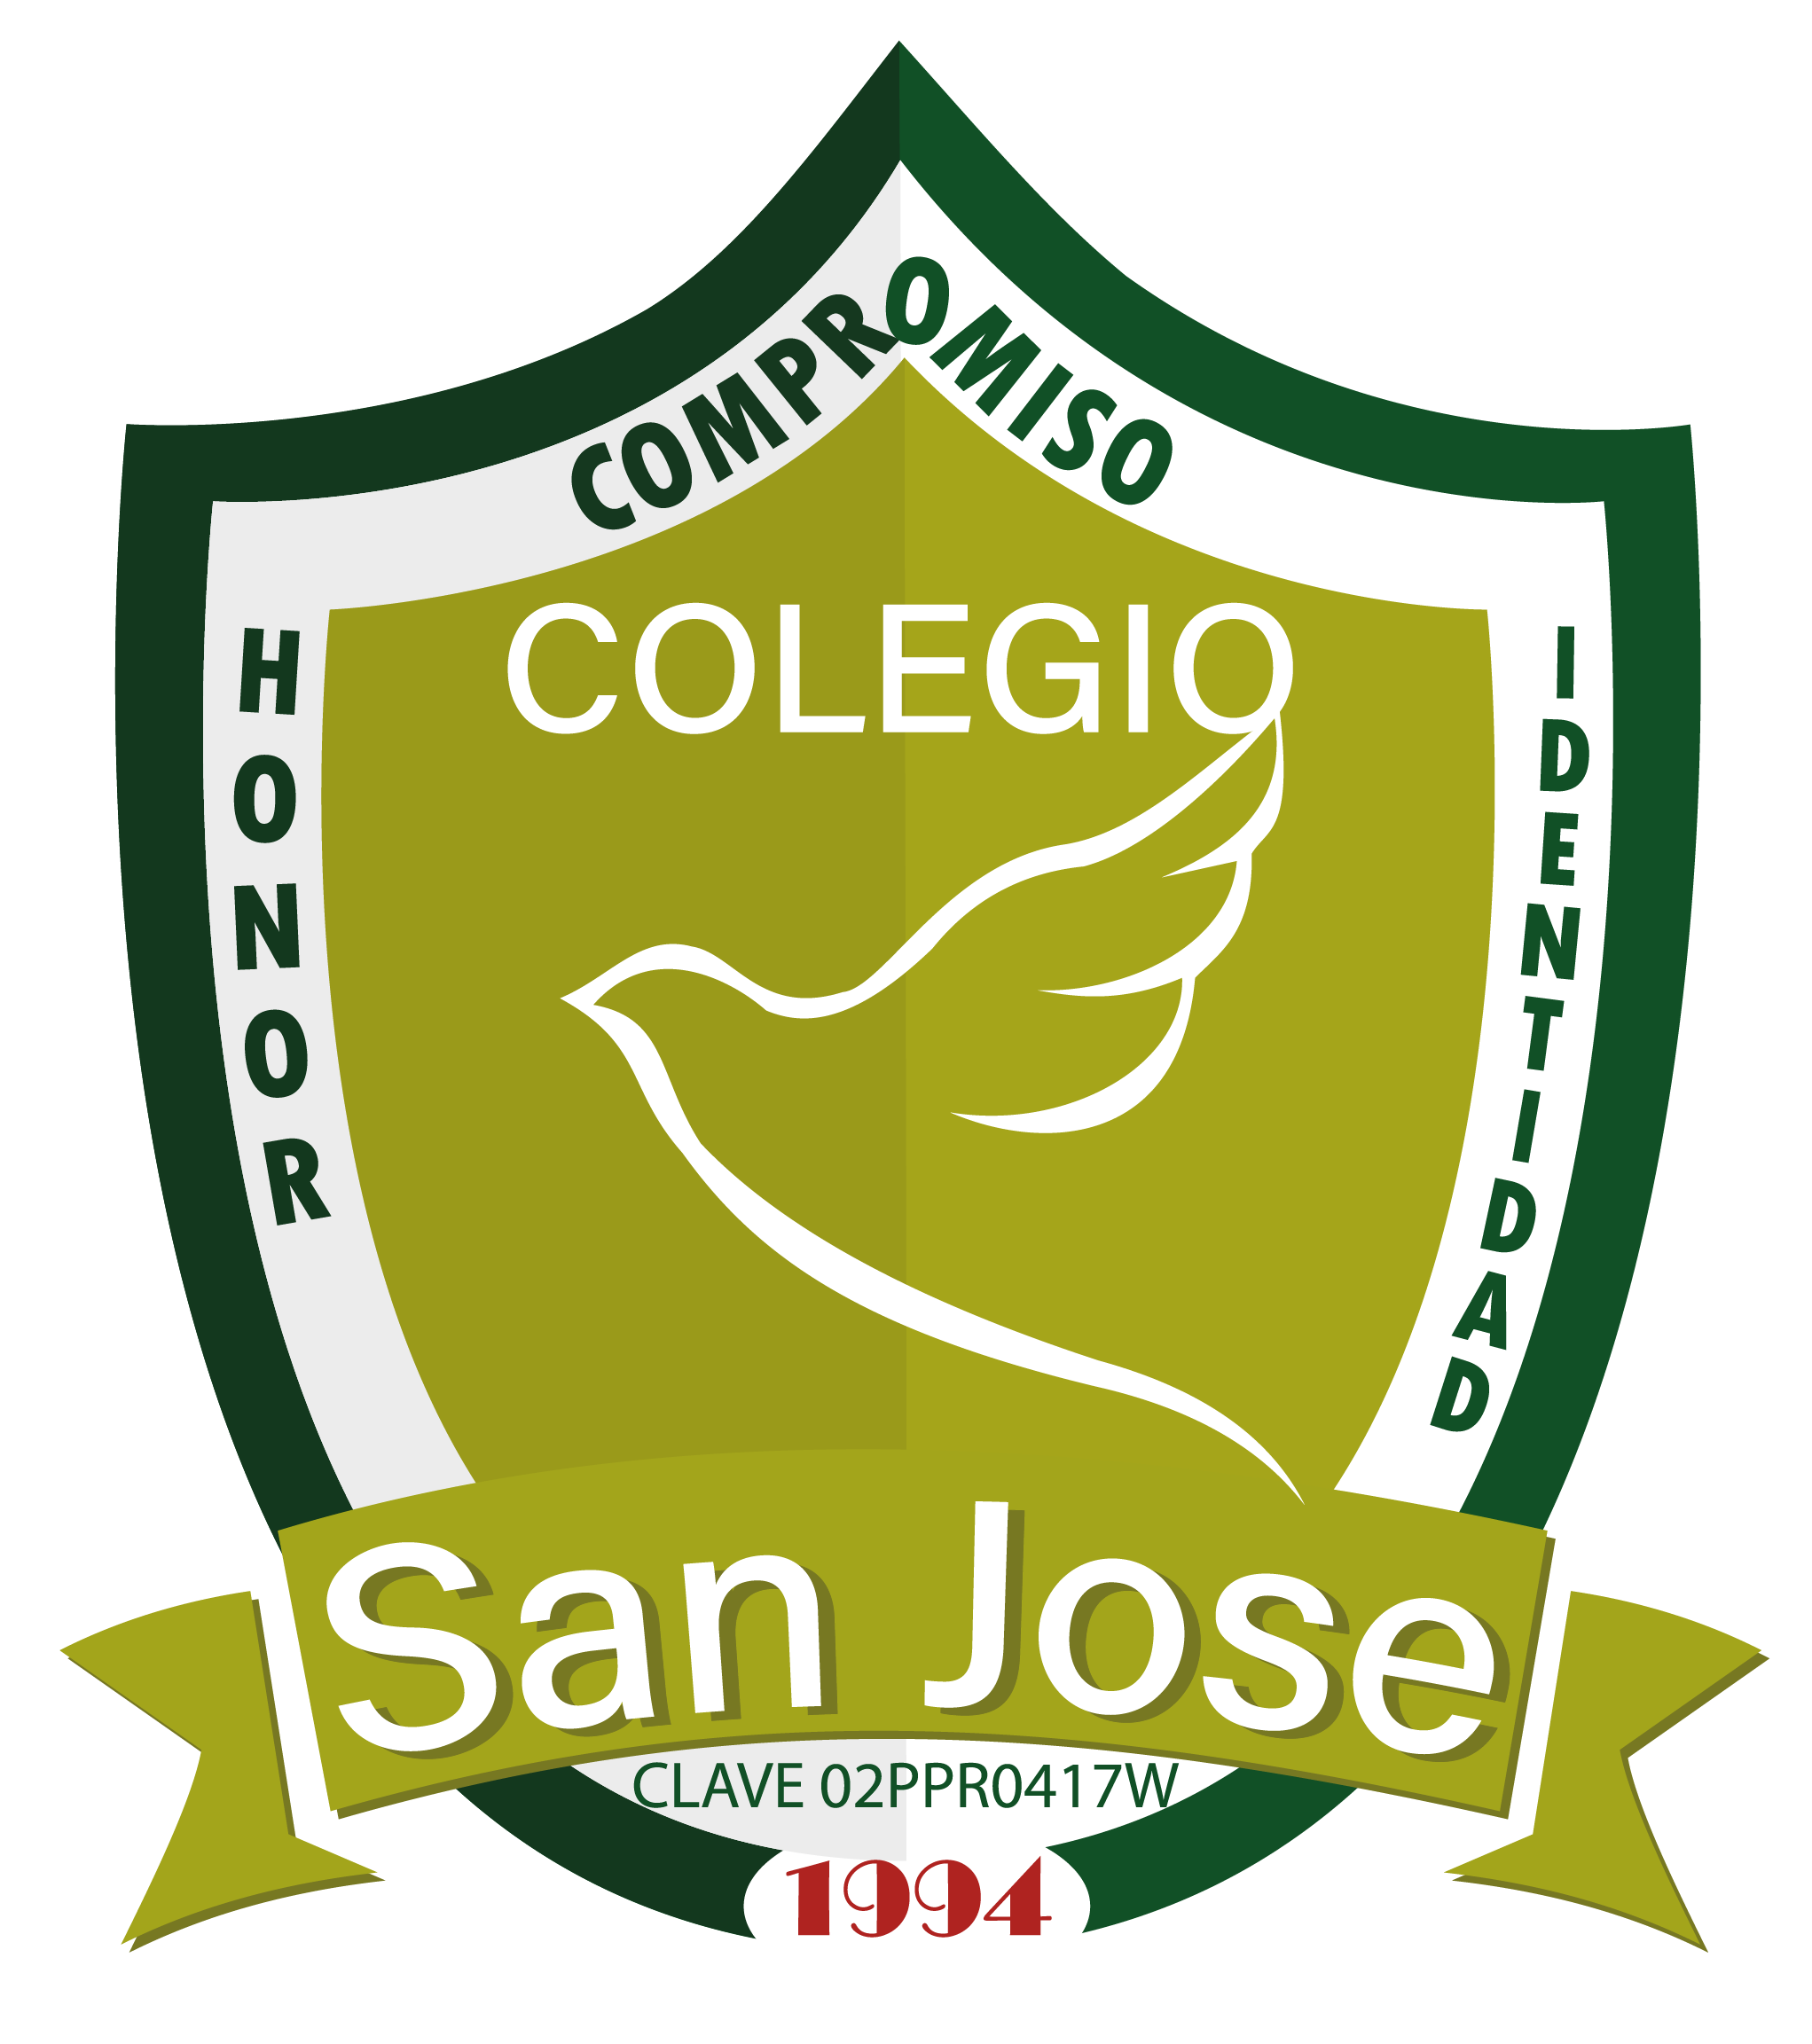 colegio san jose tijuana logo